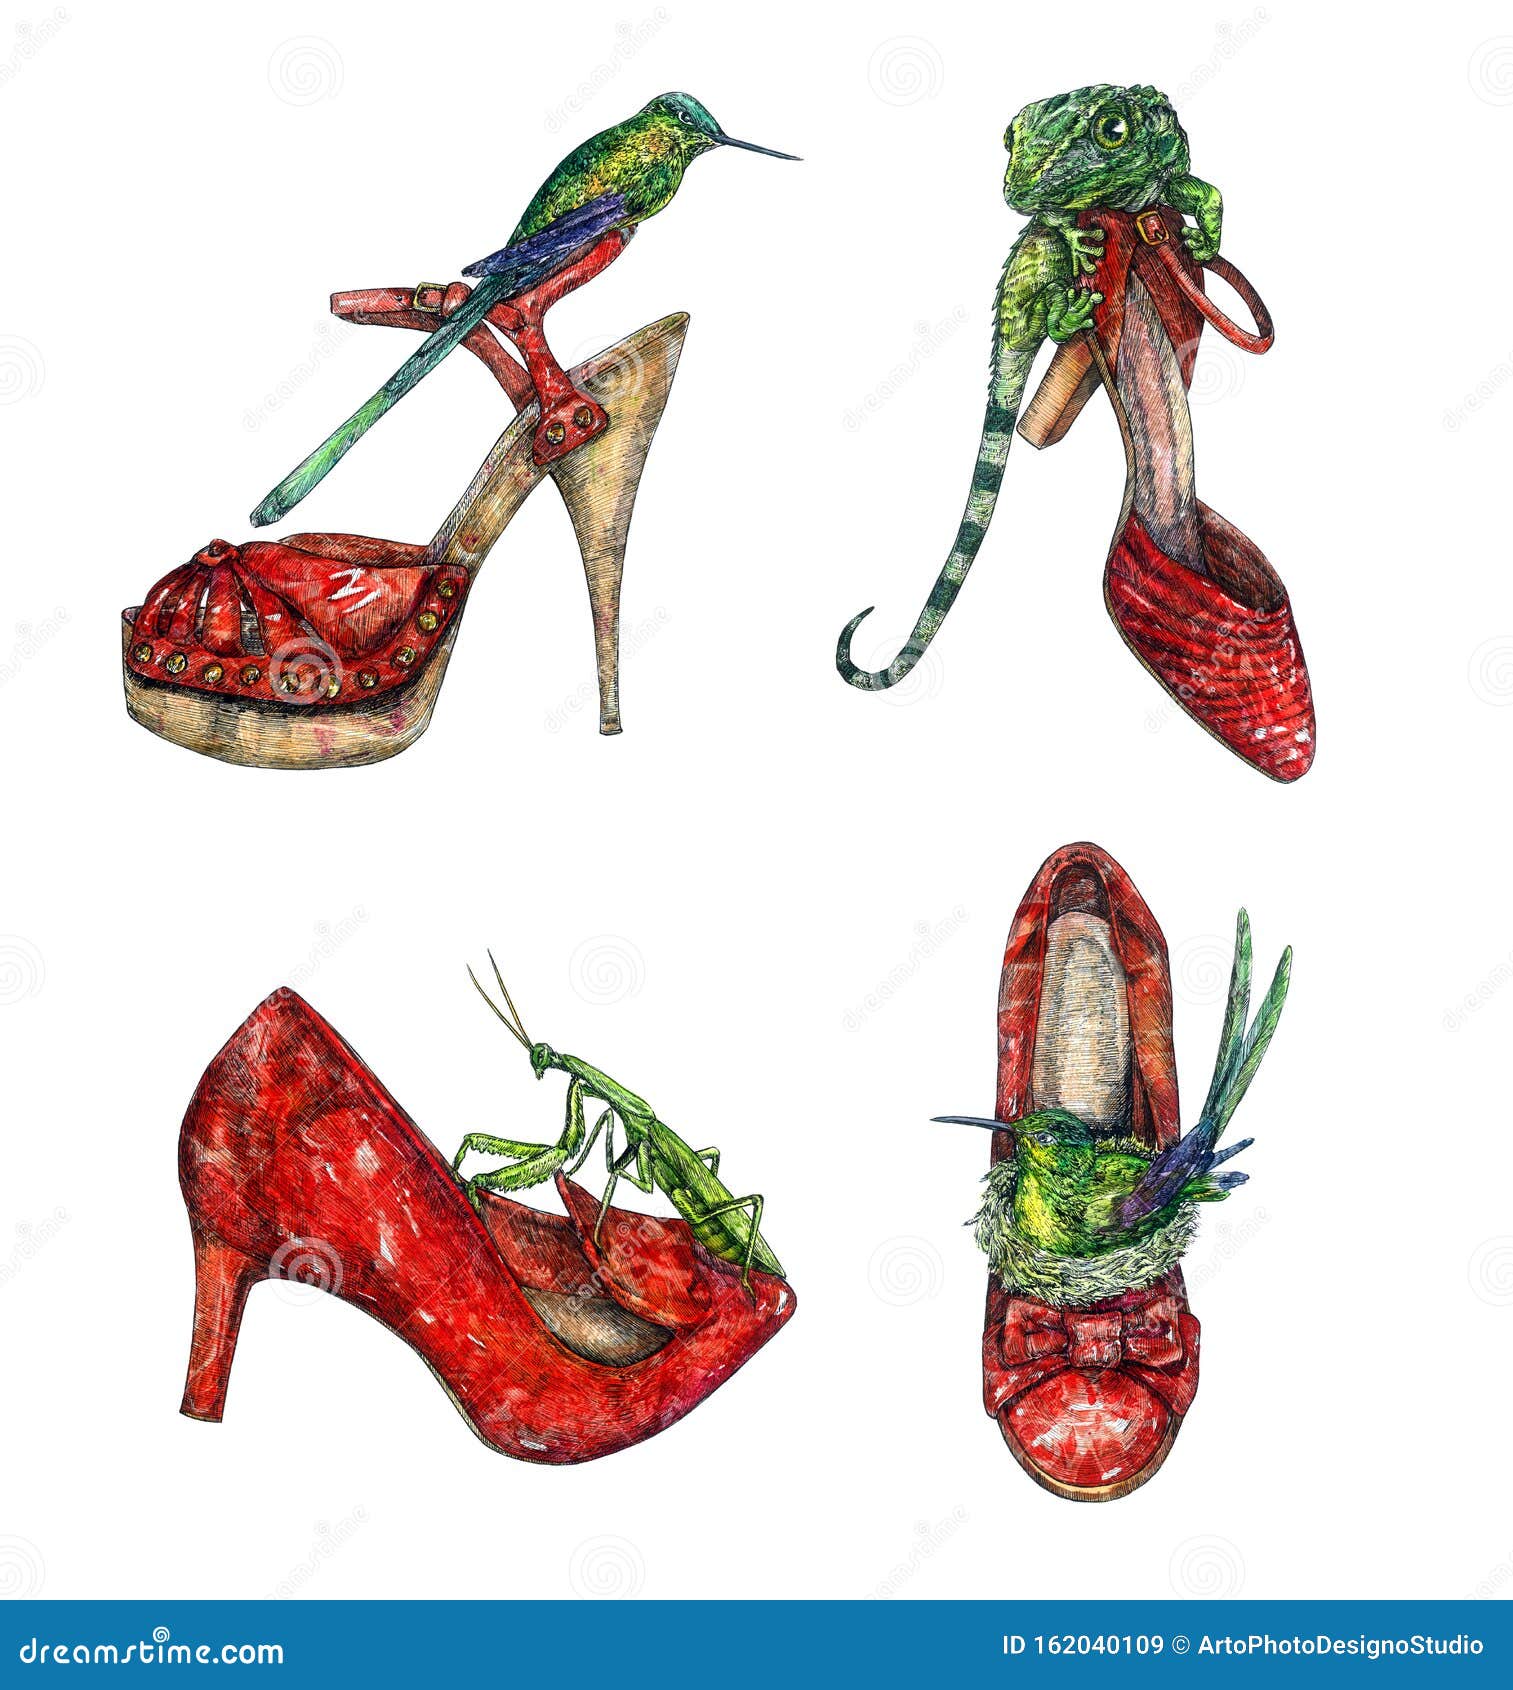 hummingbird shoes